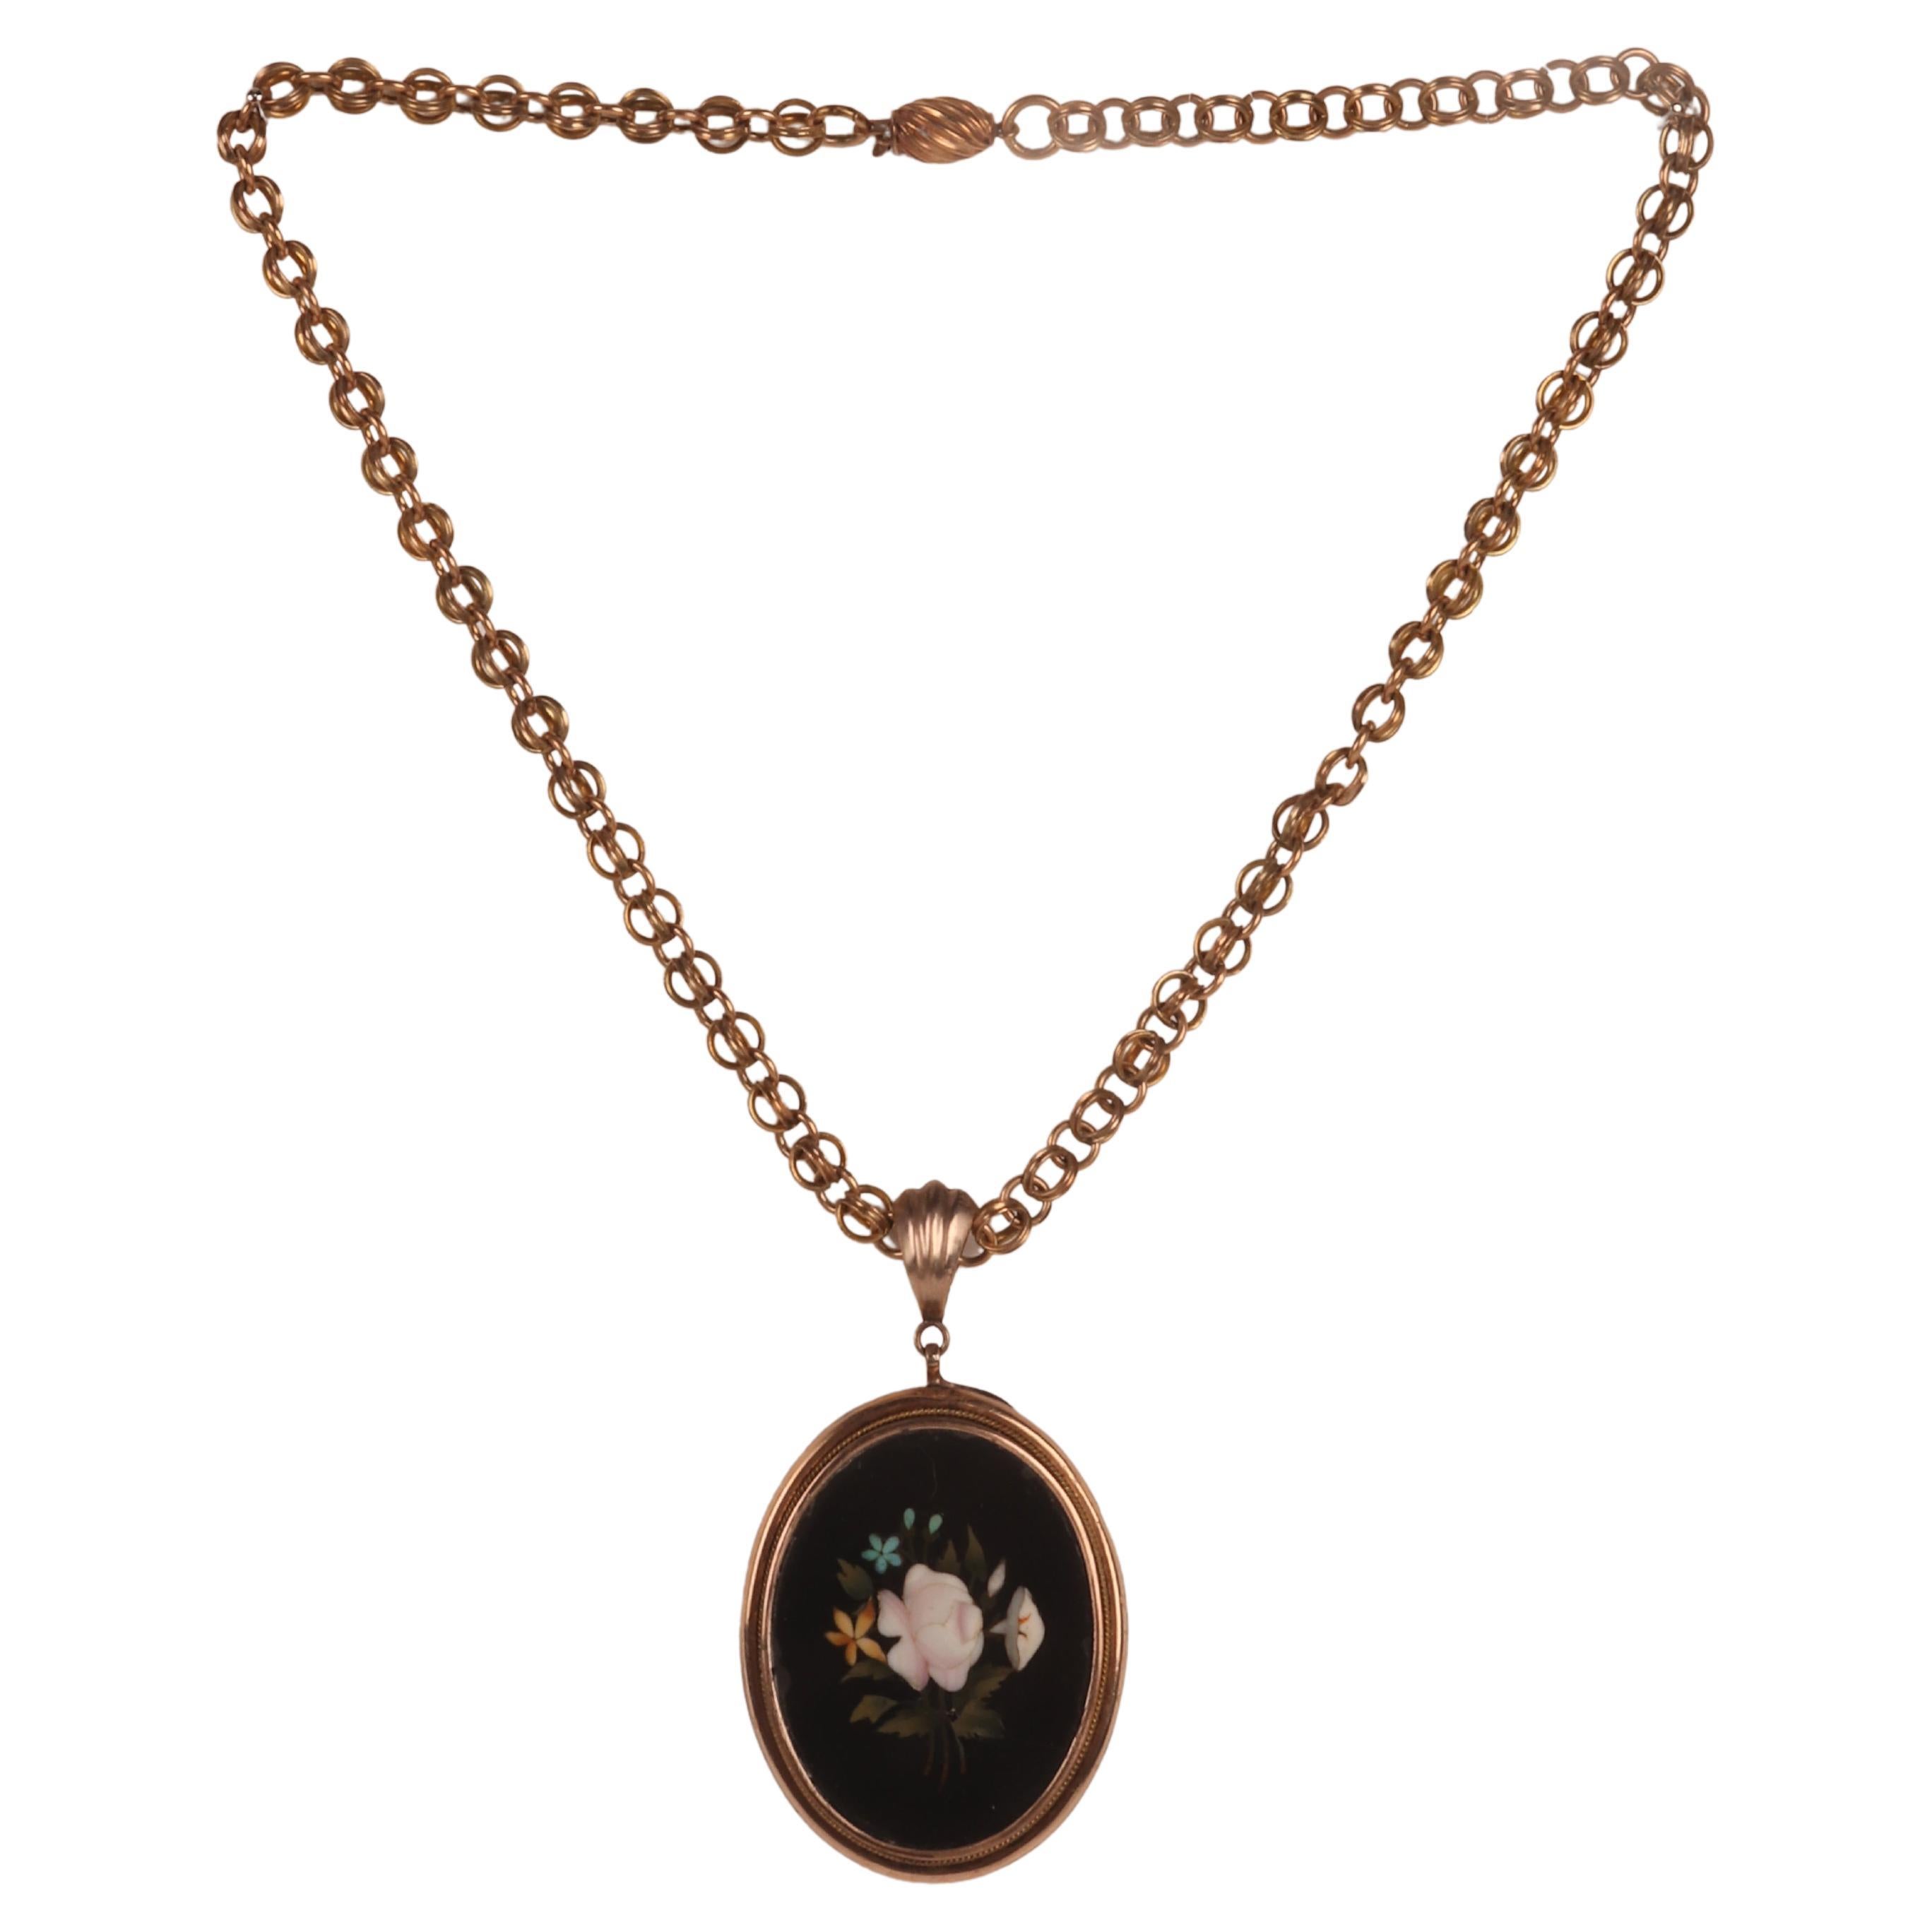 A Victorian gold necklace with a pietradura medallion pendant. England, 1860.